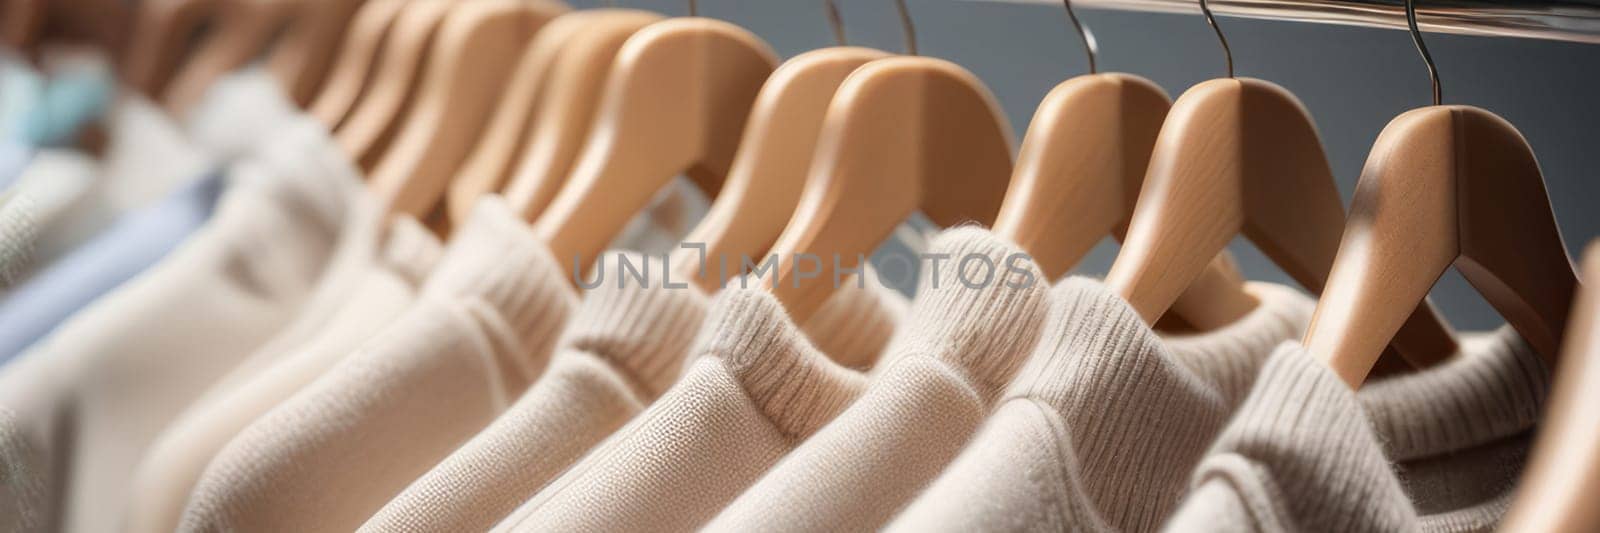 Pastel beige sweaters on hangers in a store